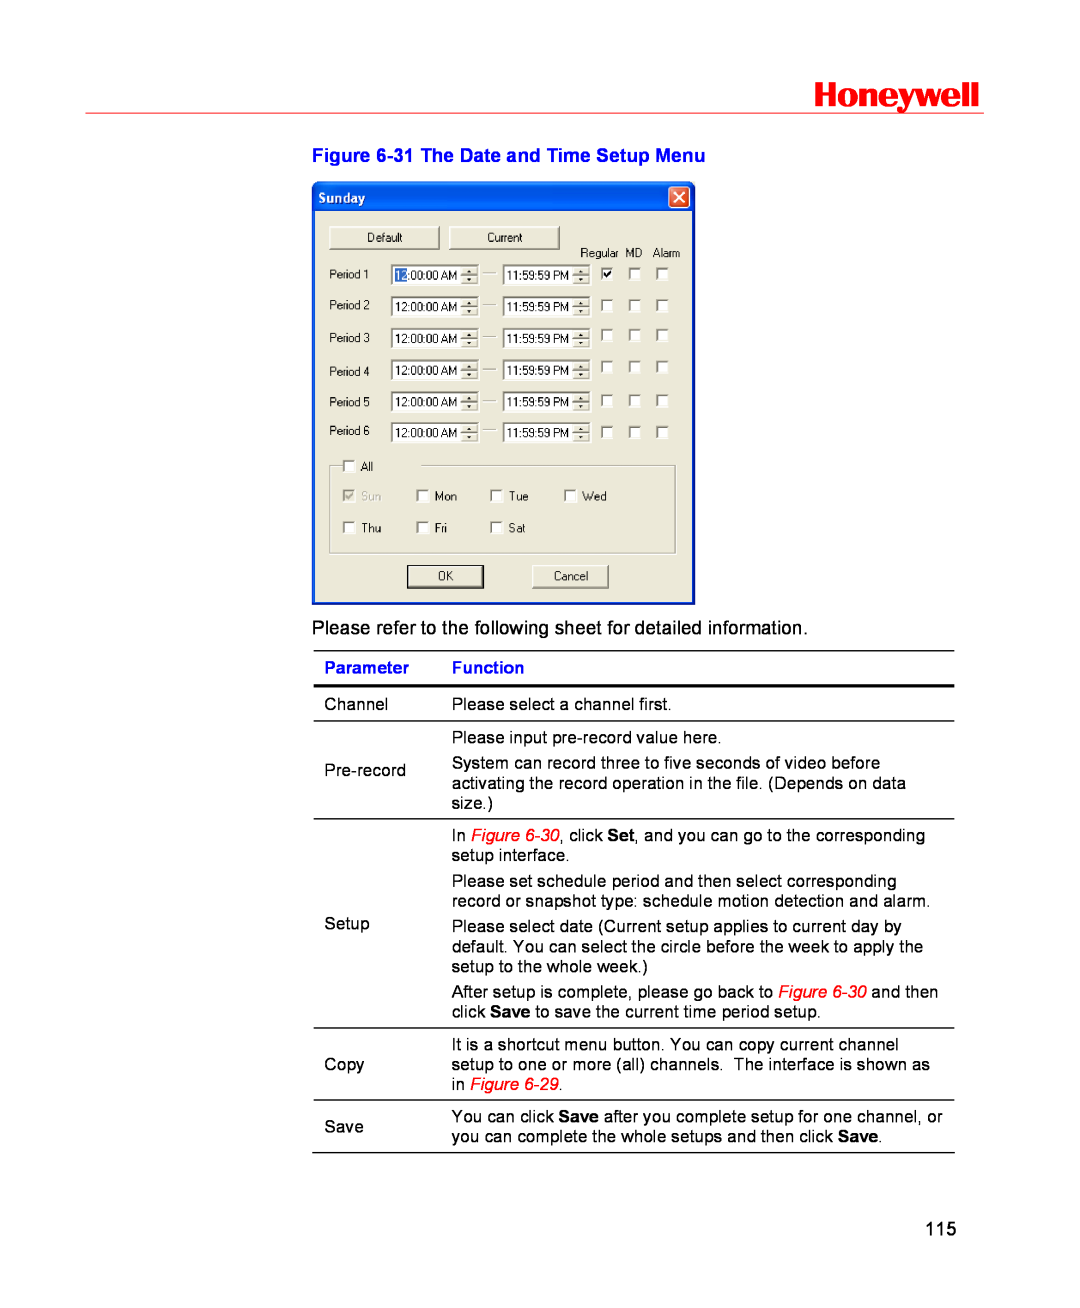 Honeywell HSVR-16, HSVR-04 user manual Honeywell, 31 The Date and Time Setup Menu, Parameter, Function, in Figure 